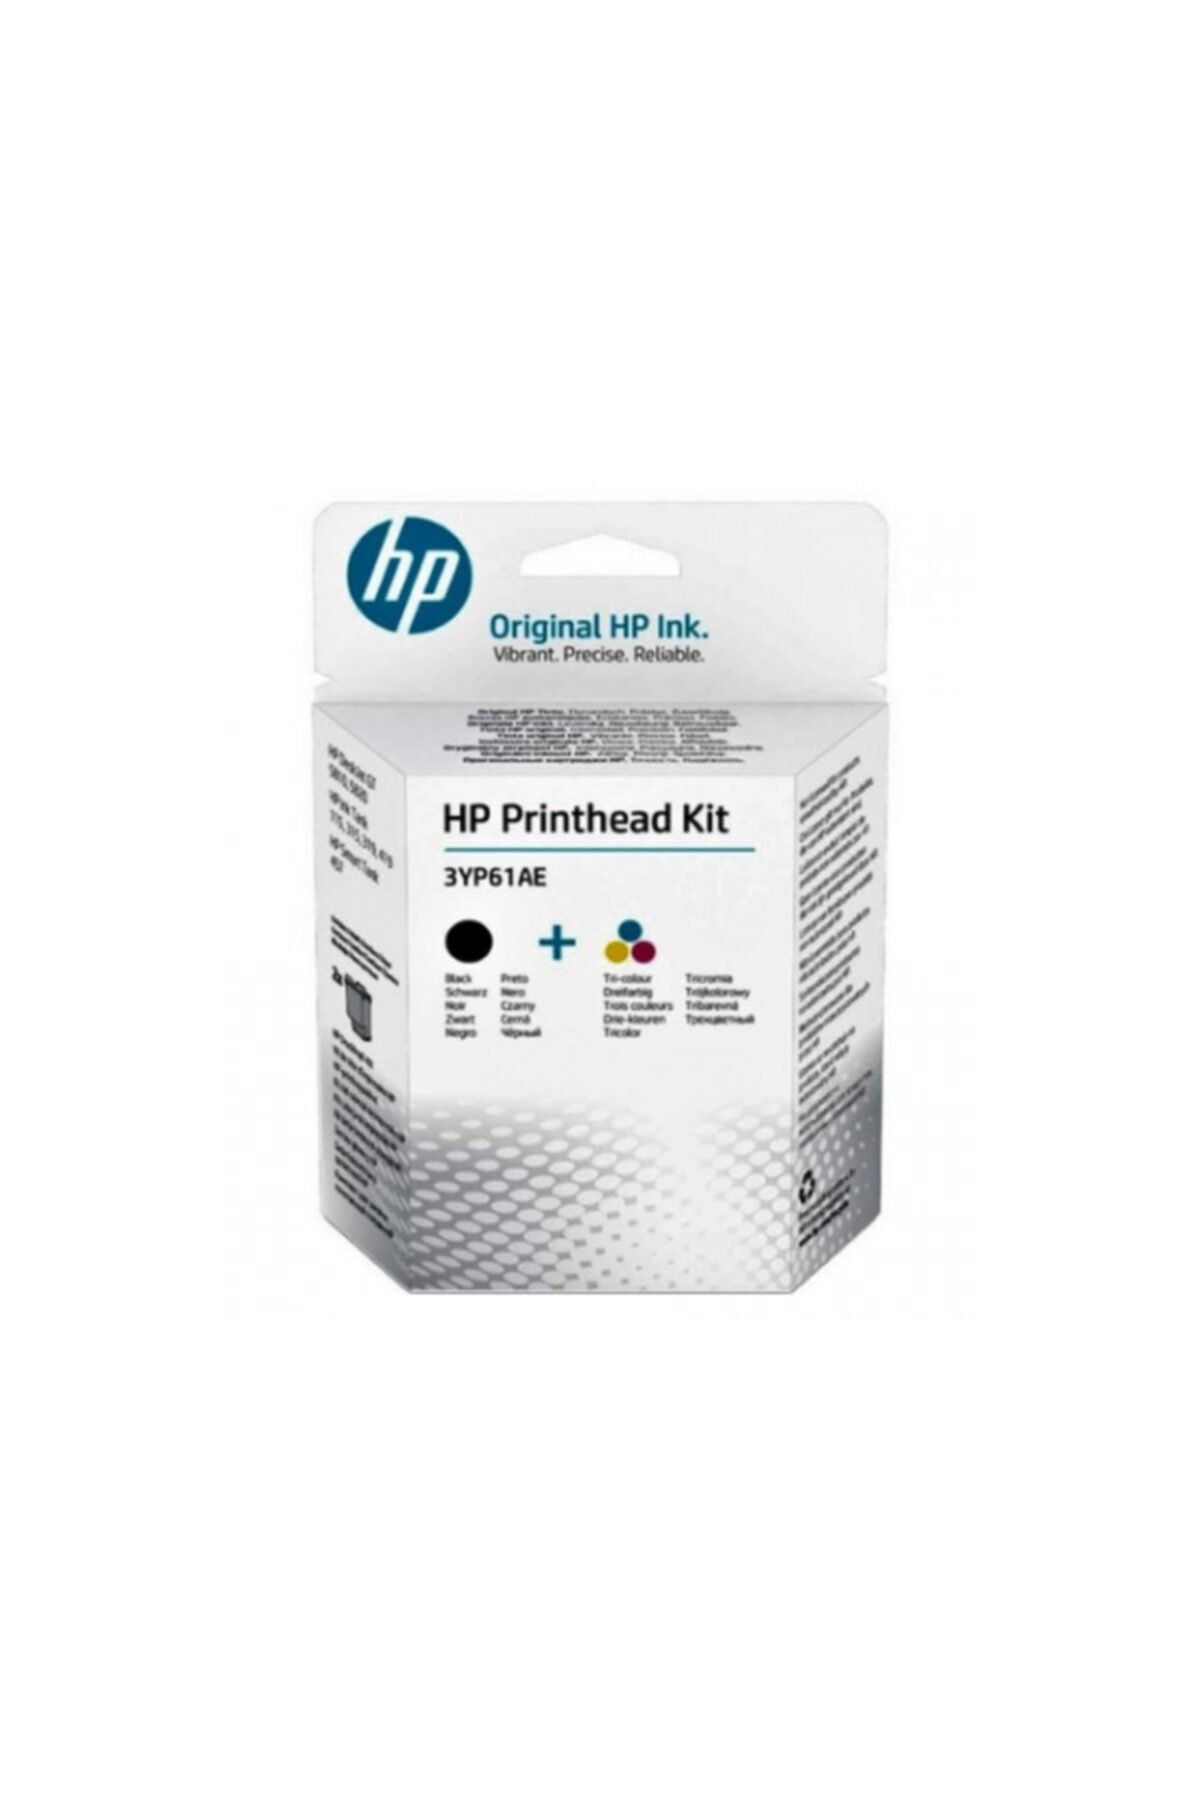 HP 3yp61ae Printhead Kit